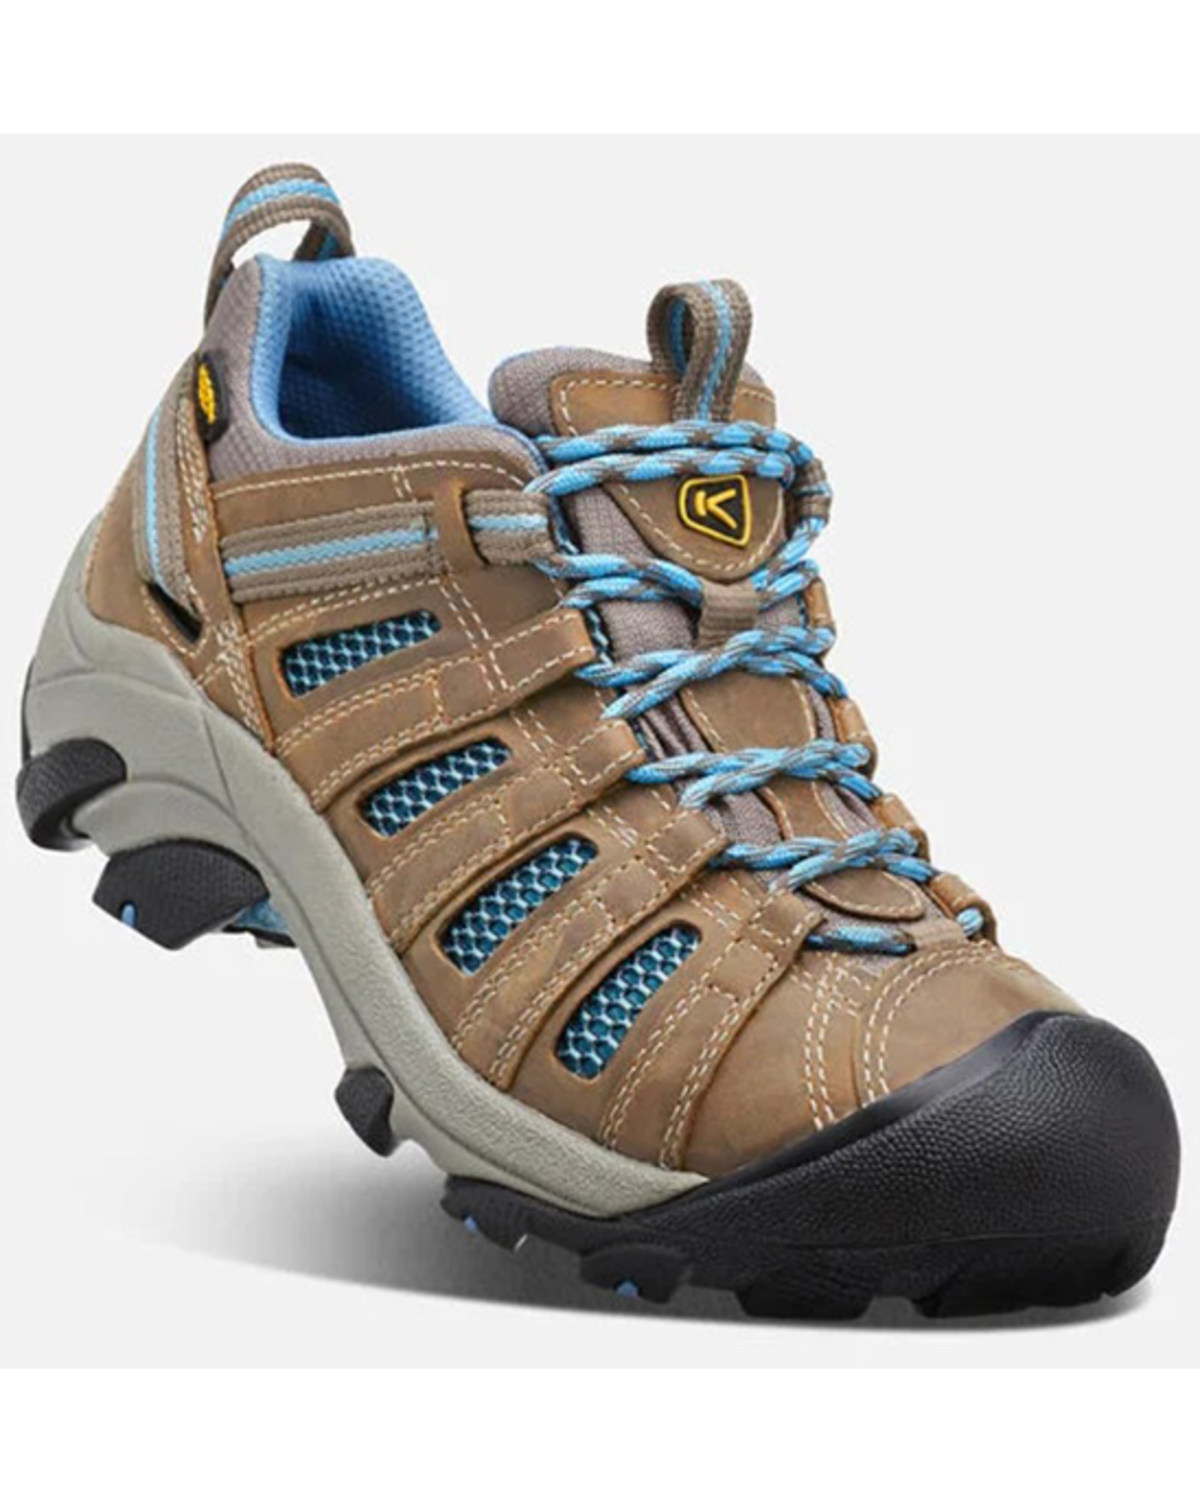 Keen Women's Voyageur Hiking Boots - Soft Toe